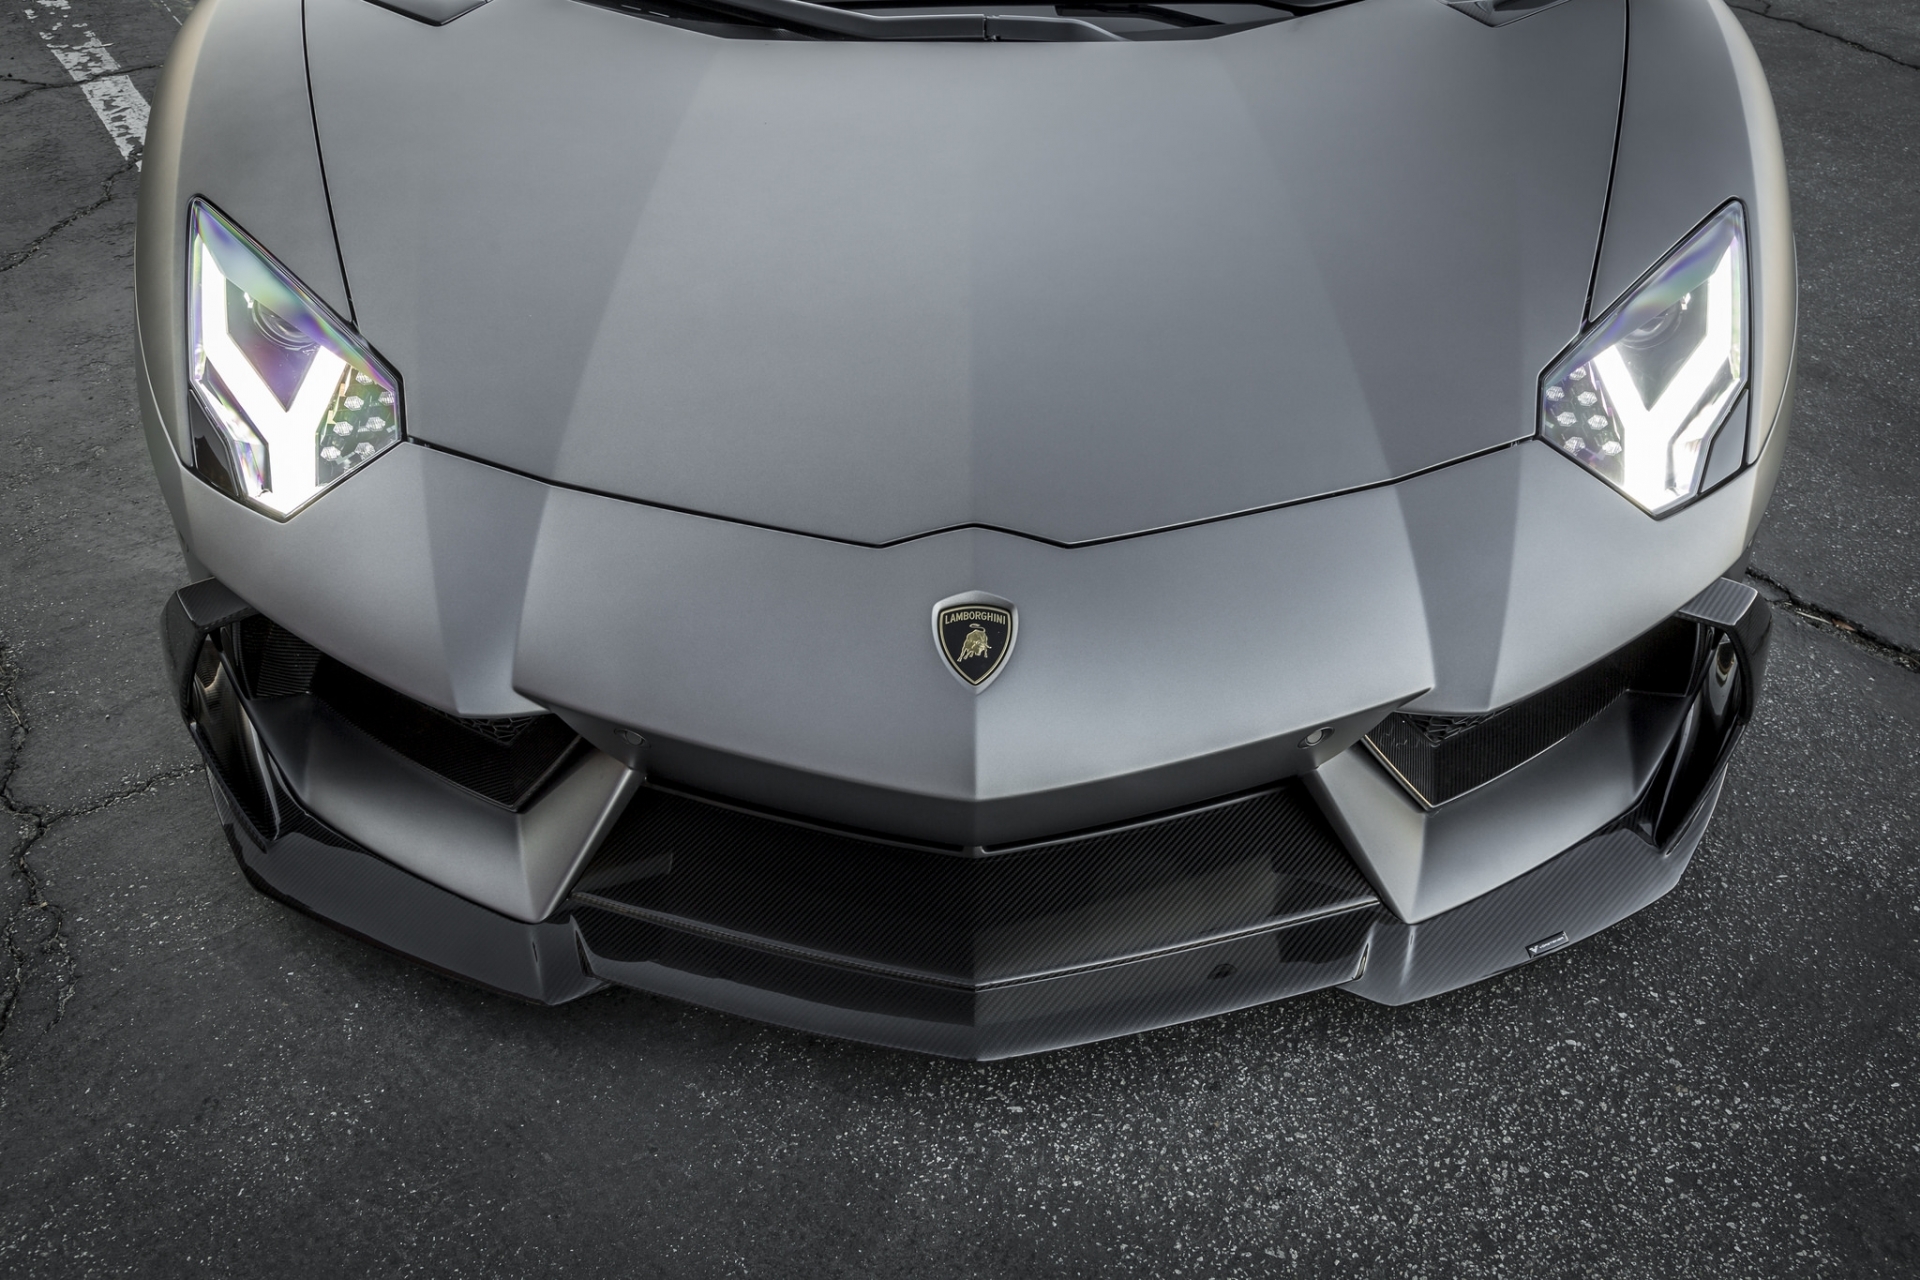 Vorsteiner Nero body kit for Lamborghini Aventador latest model